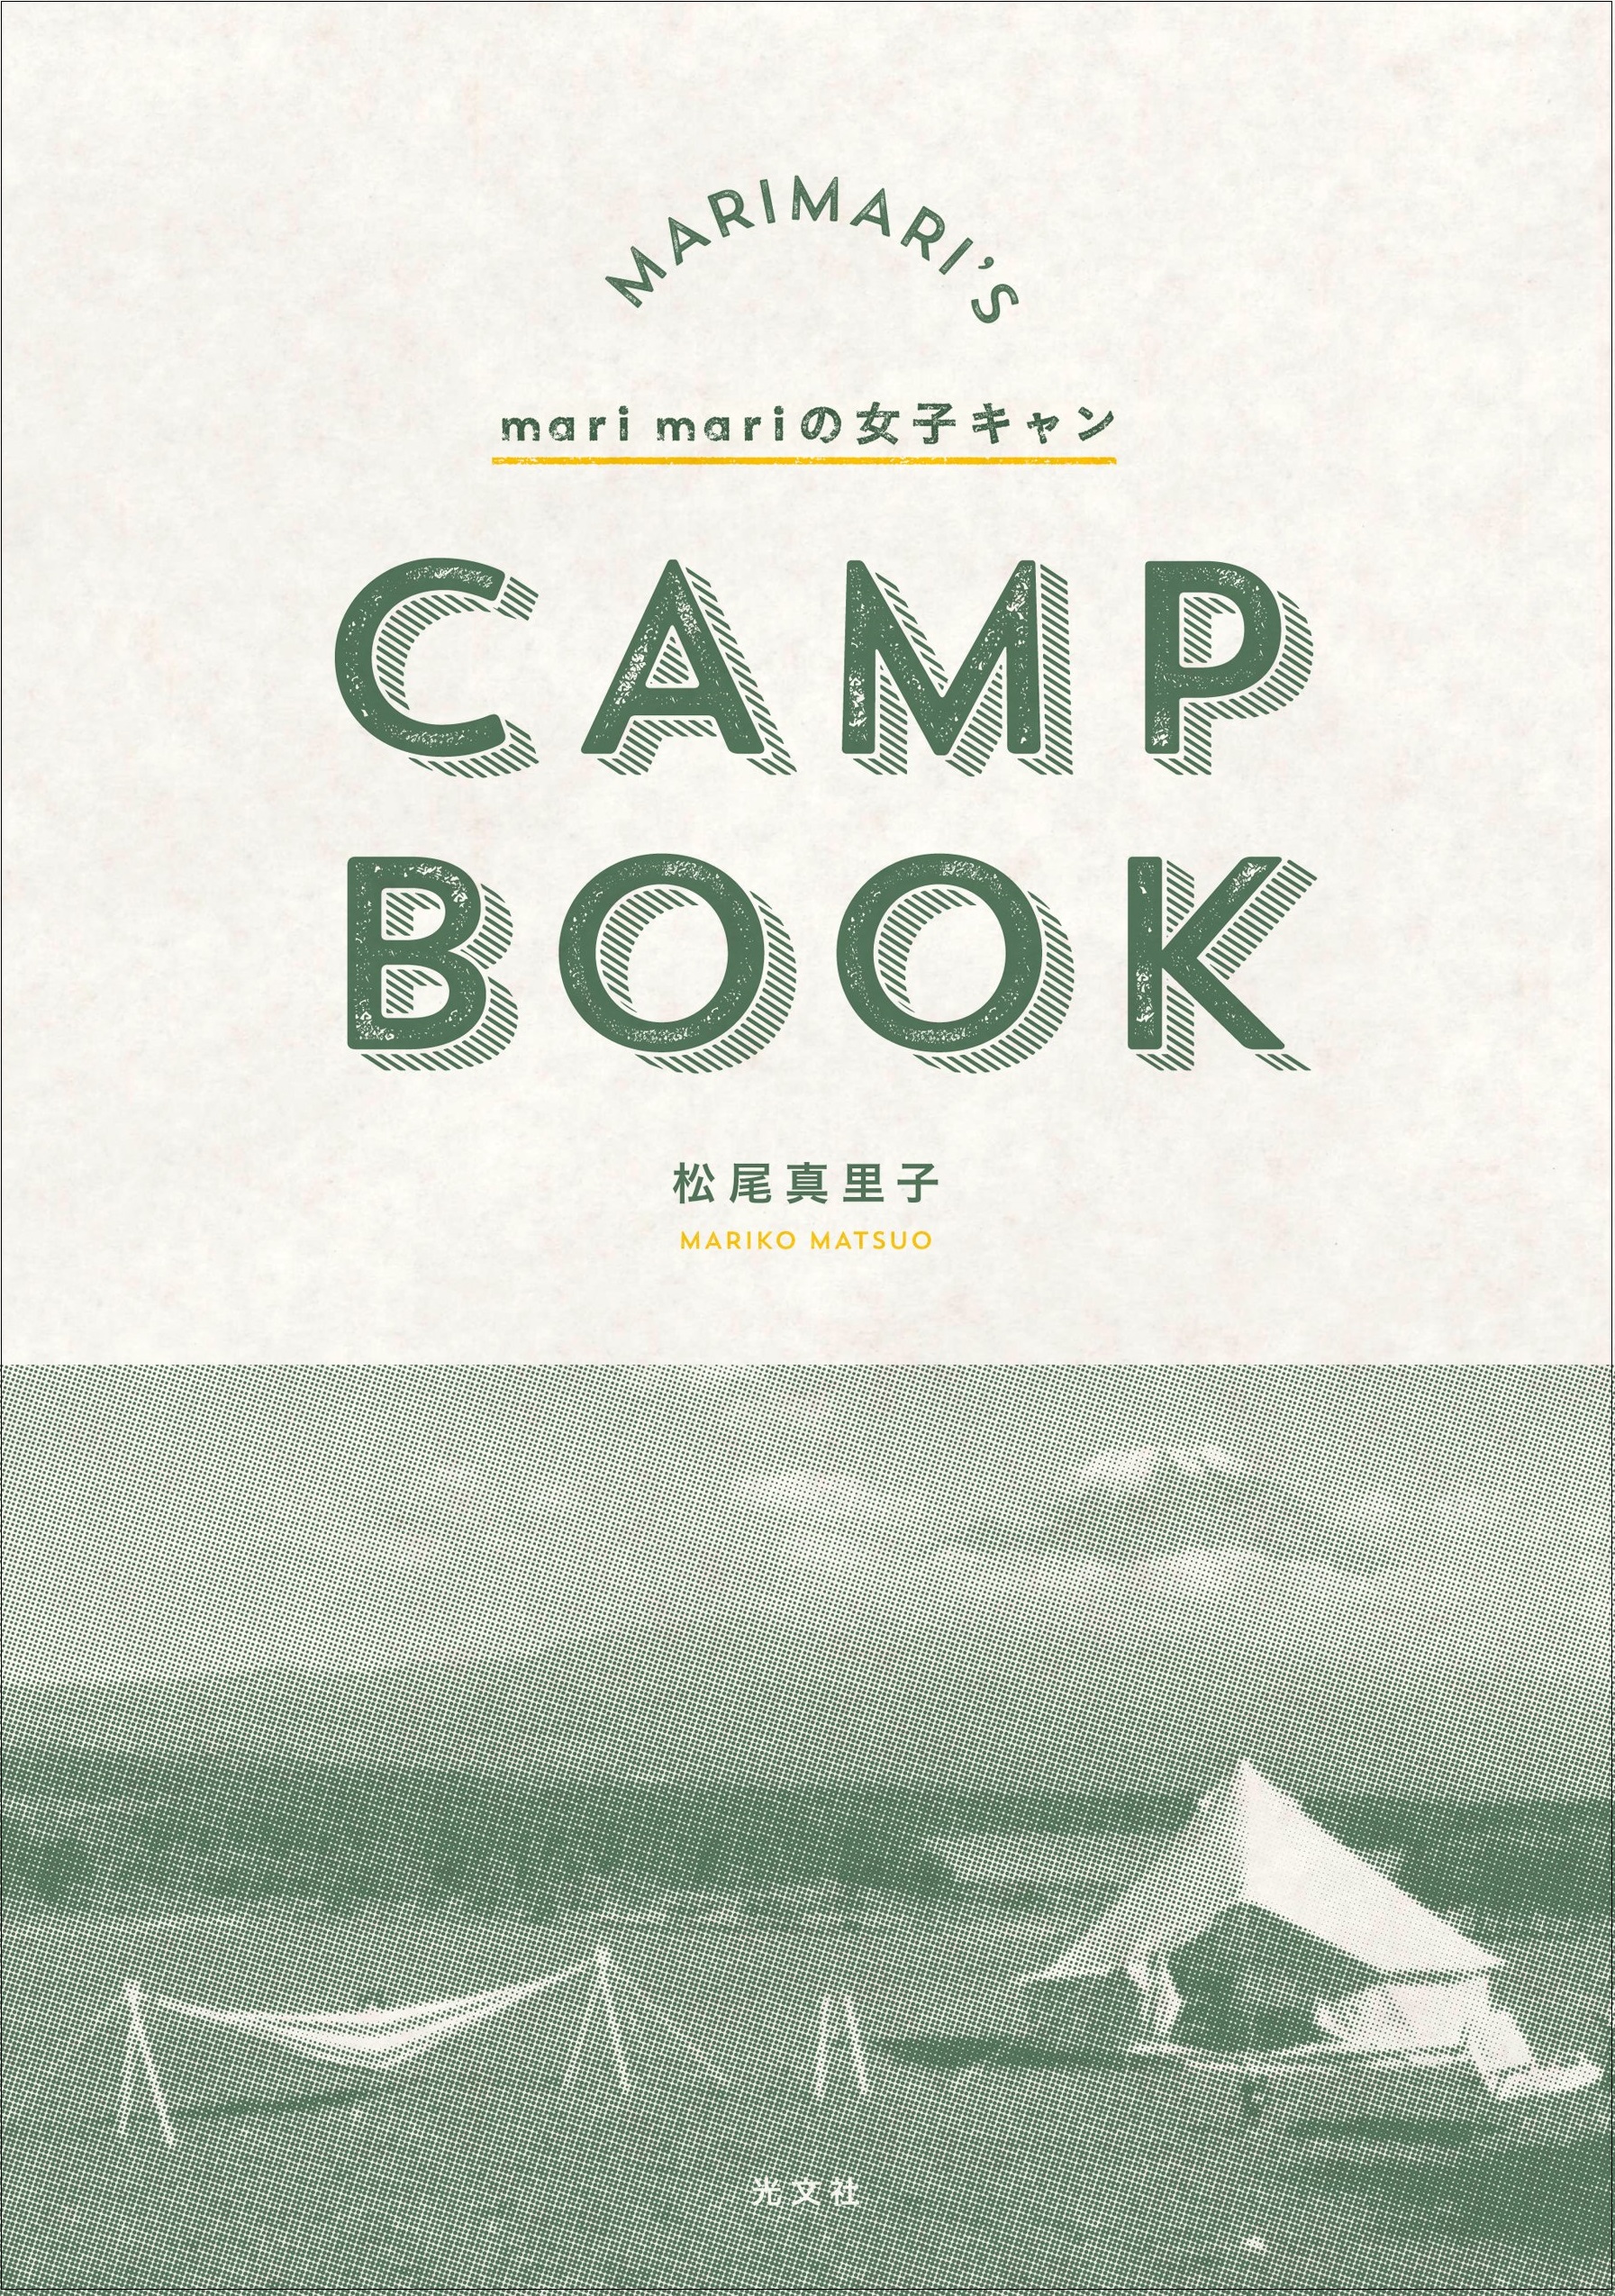 Marimari’s Camp Book